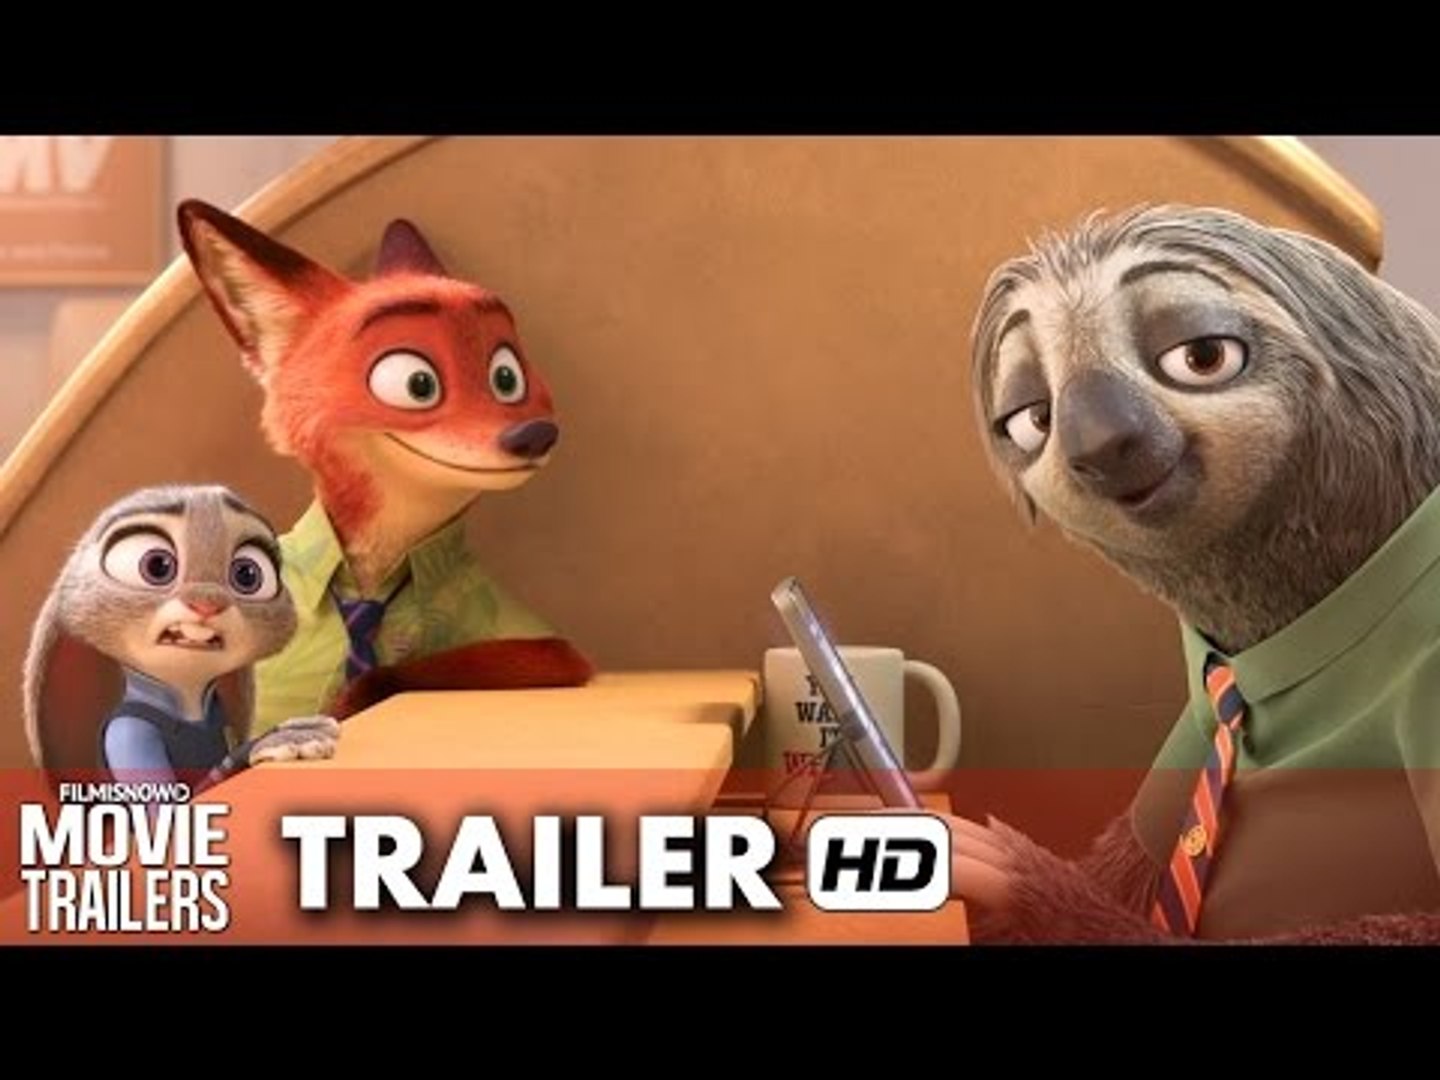 Zootopia Official Sloth Trailer #1 (2016) - Disney Animation [HD